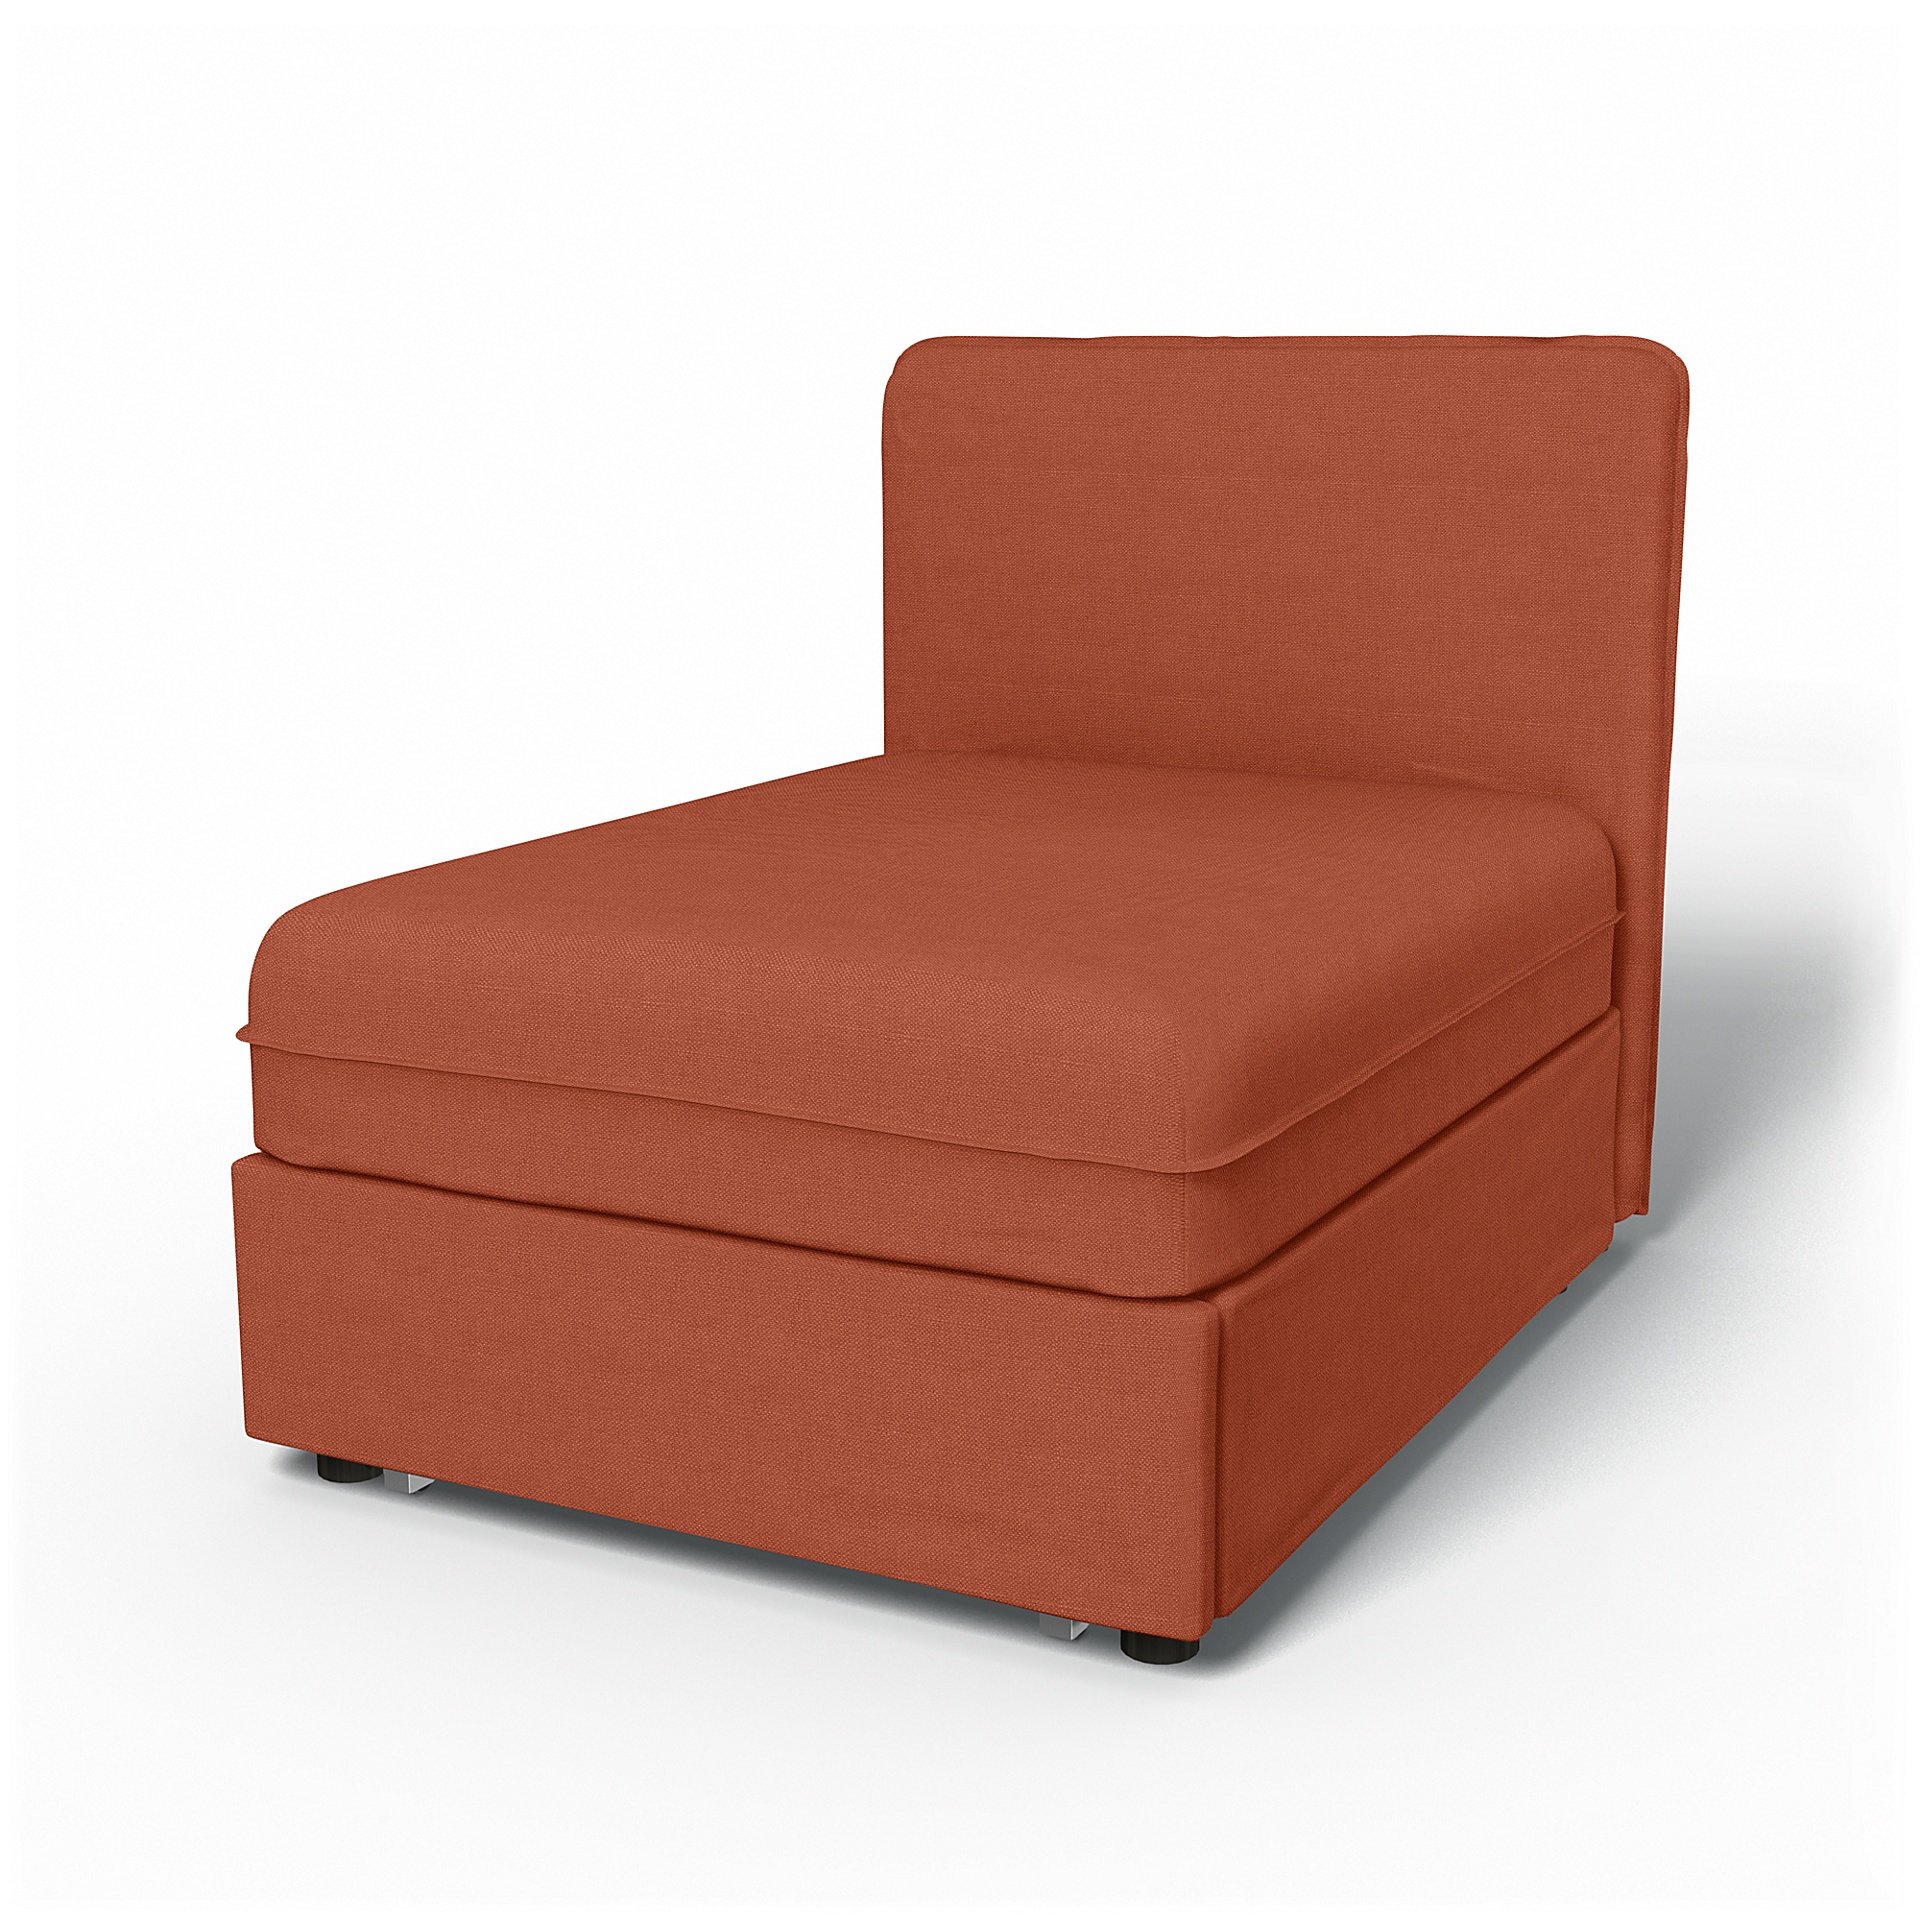 IKEA - Vallentuna Seat Module with Low Back Sofa Bed Cover 80x100 cm 32x39in, Burnt Orange, Linen - 